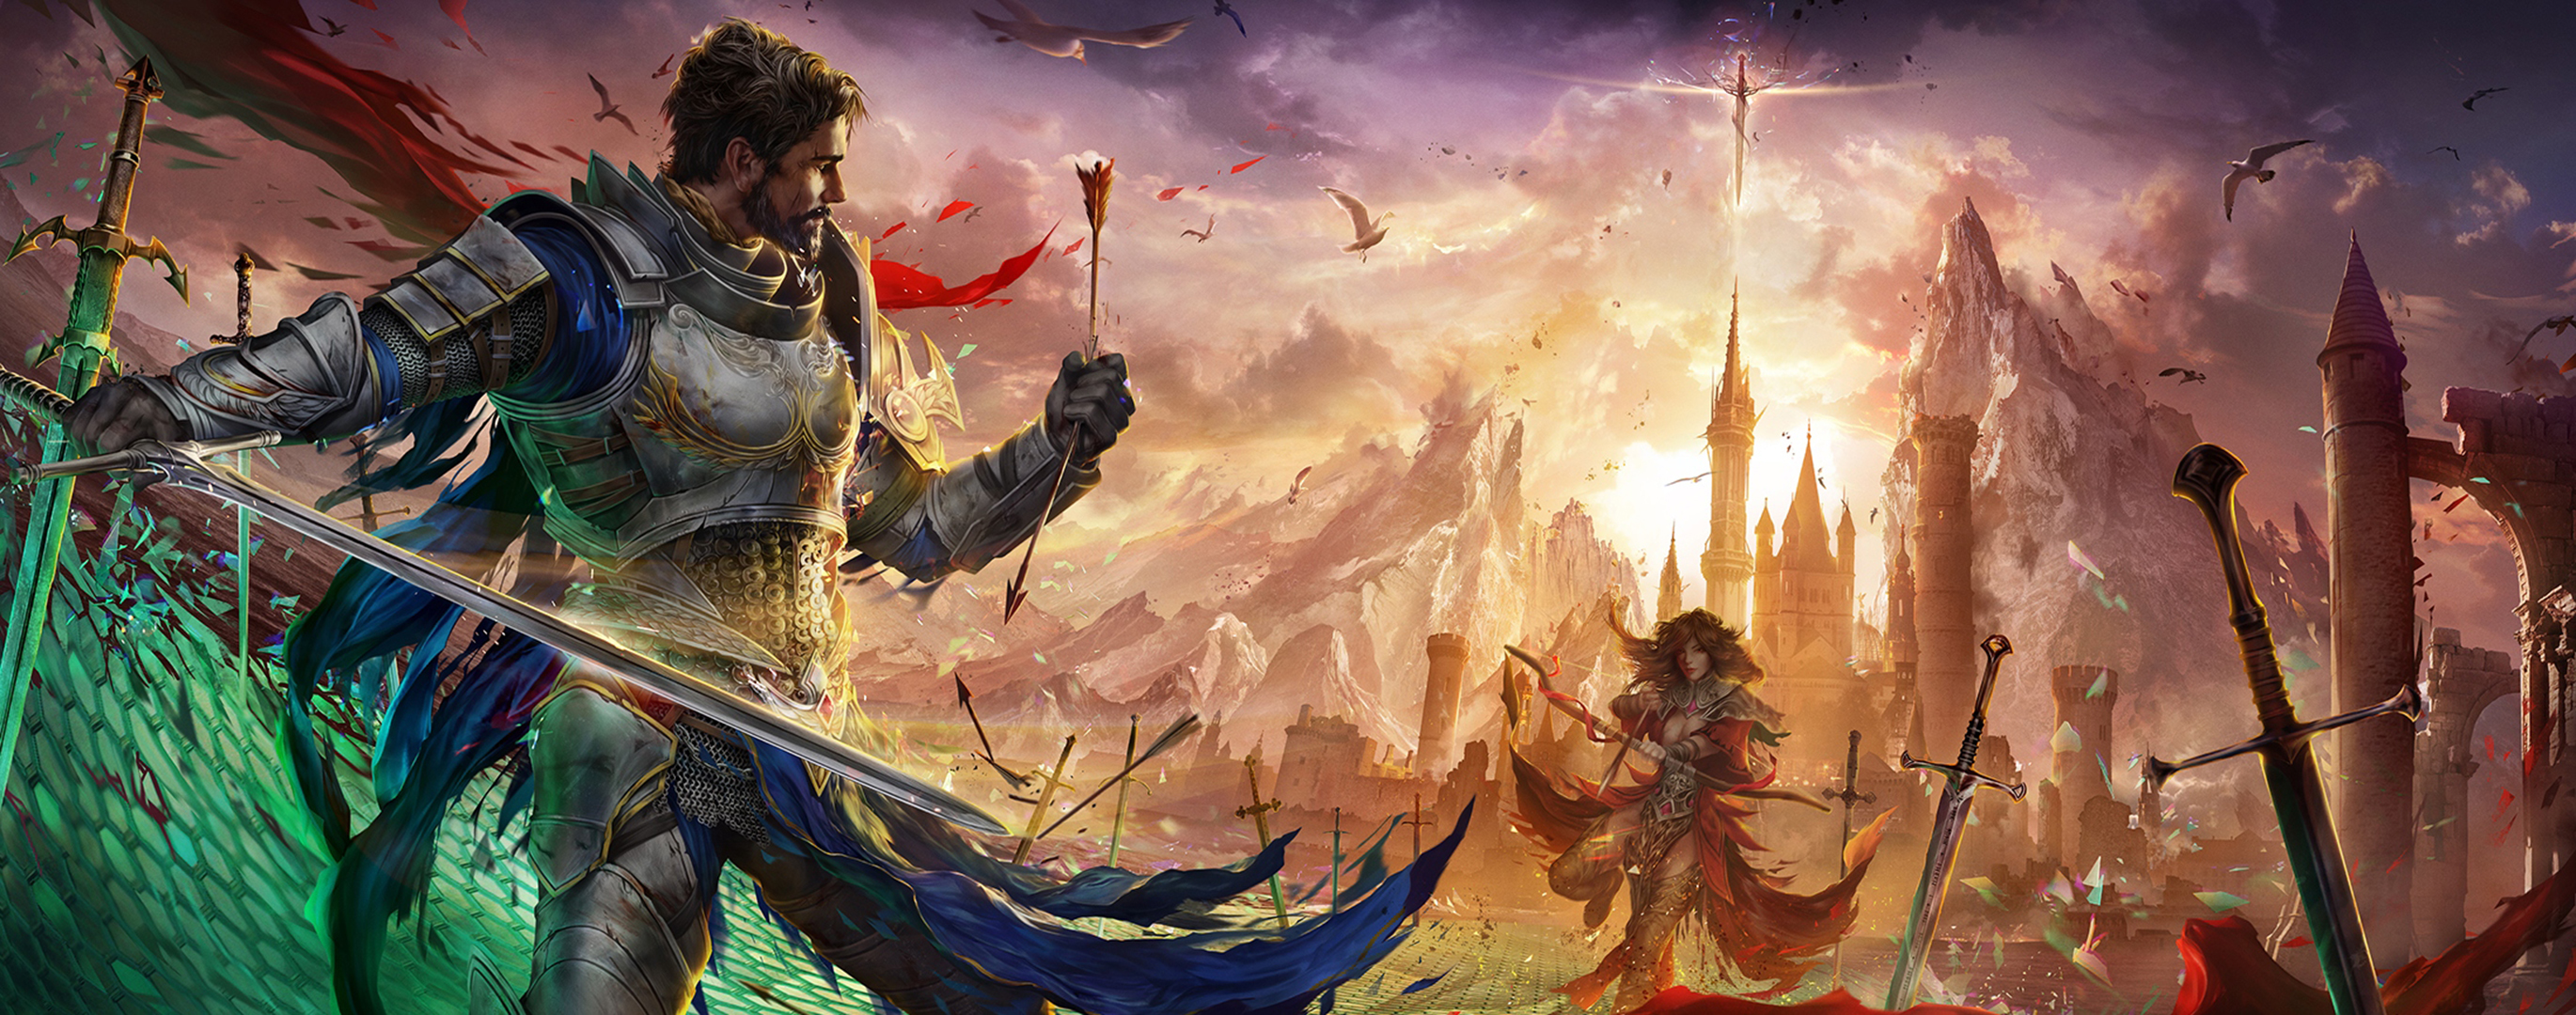 Fantasy Warrior HD Wallpaper by Anastasia Bulgakova